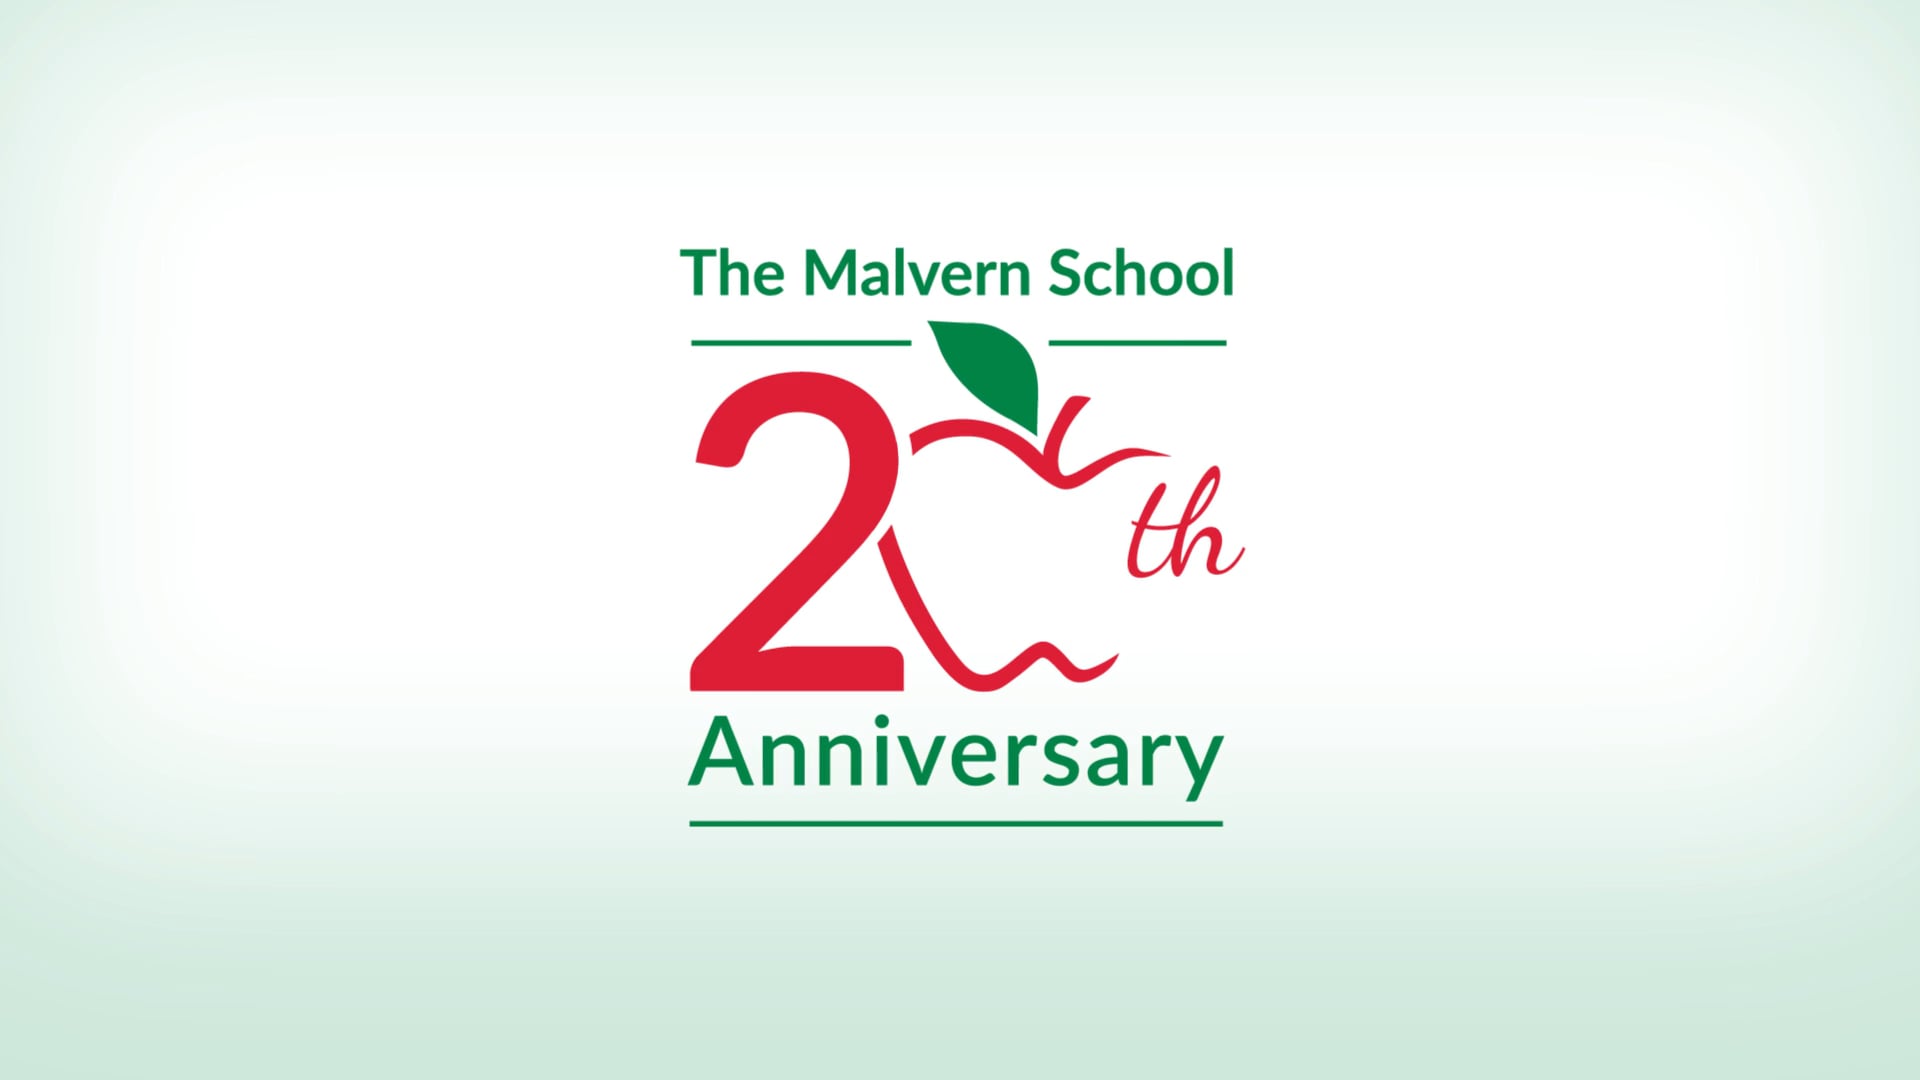 The Malvern School - 20th Anniversary